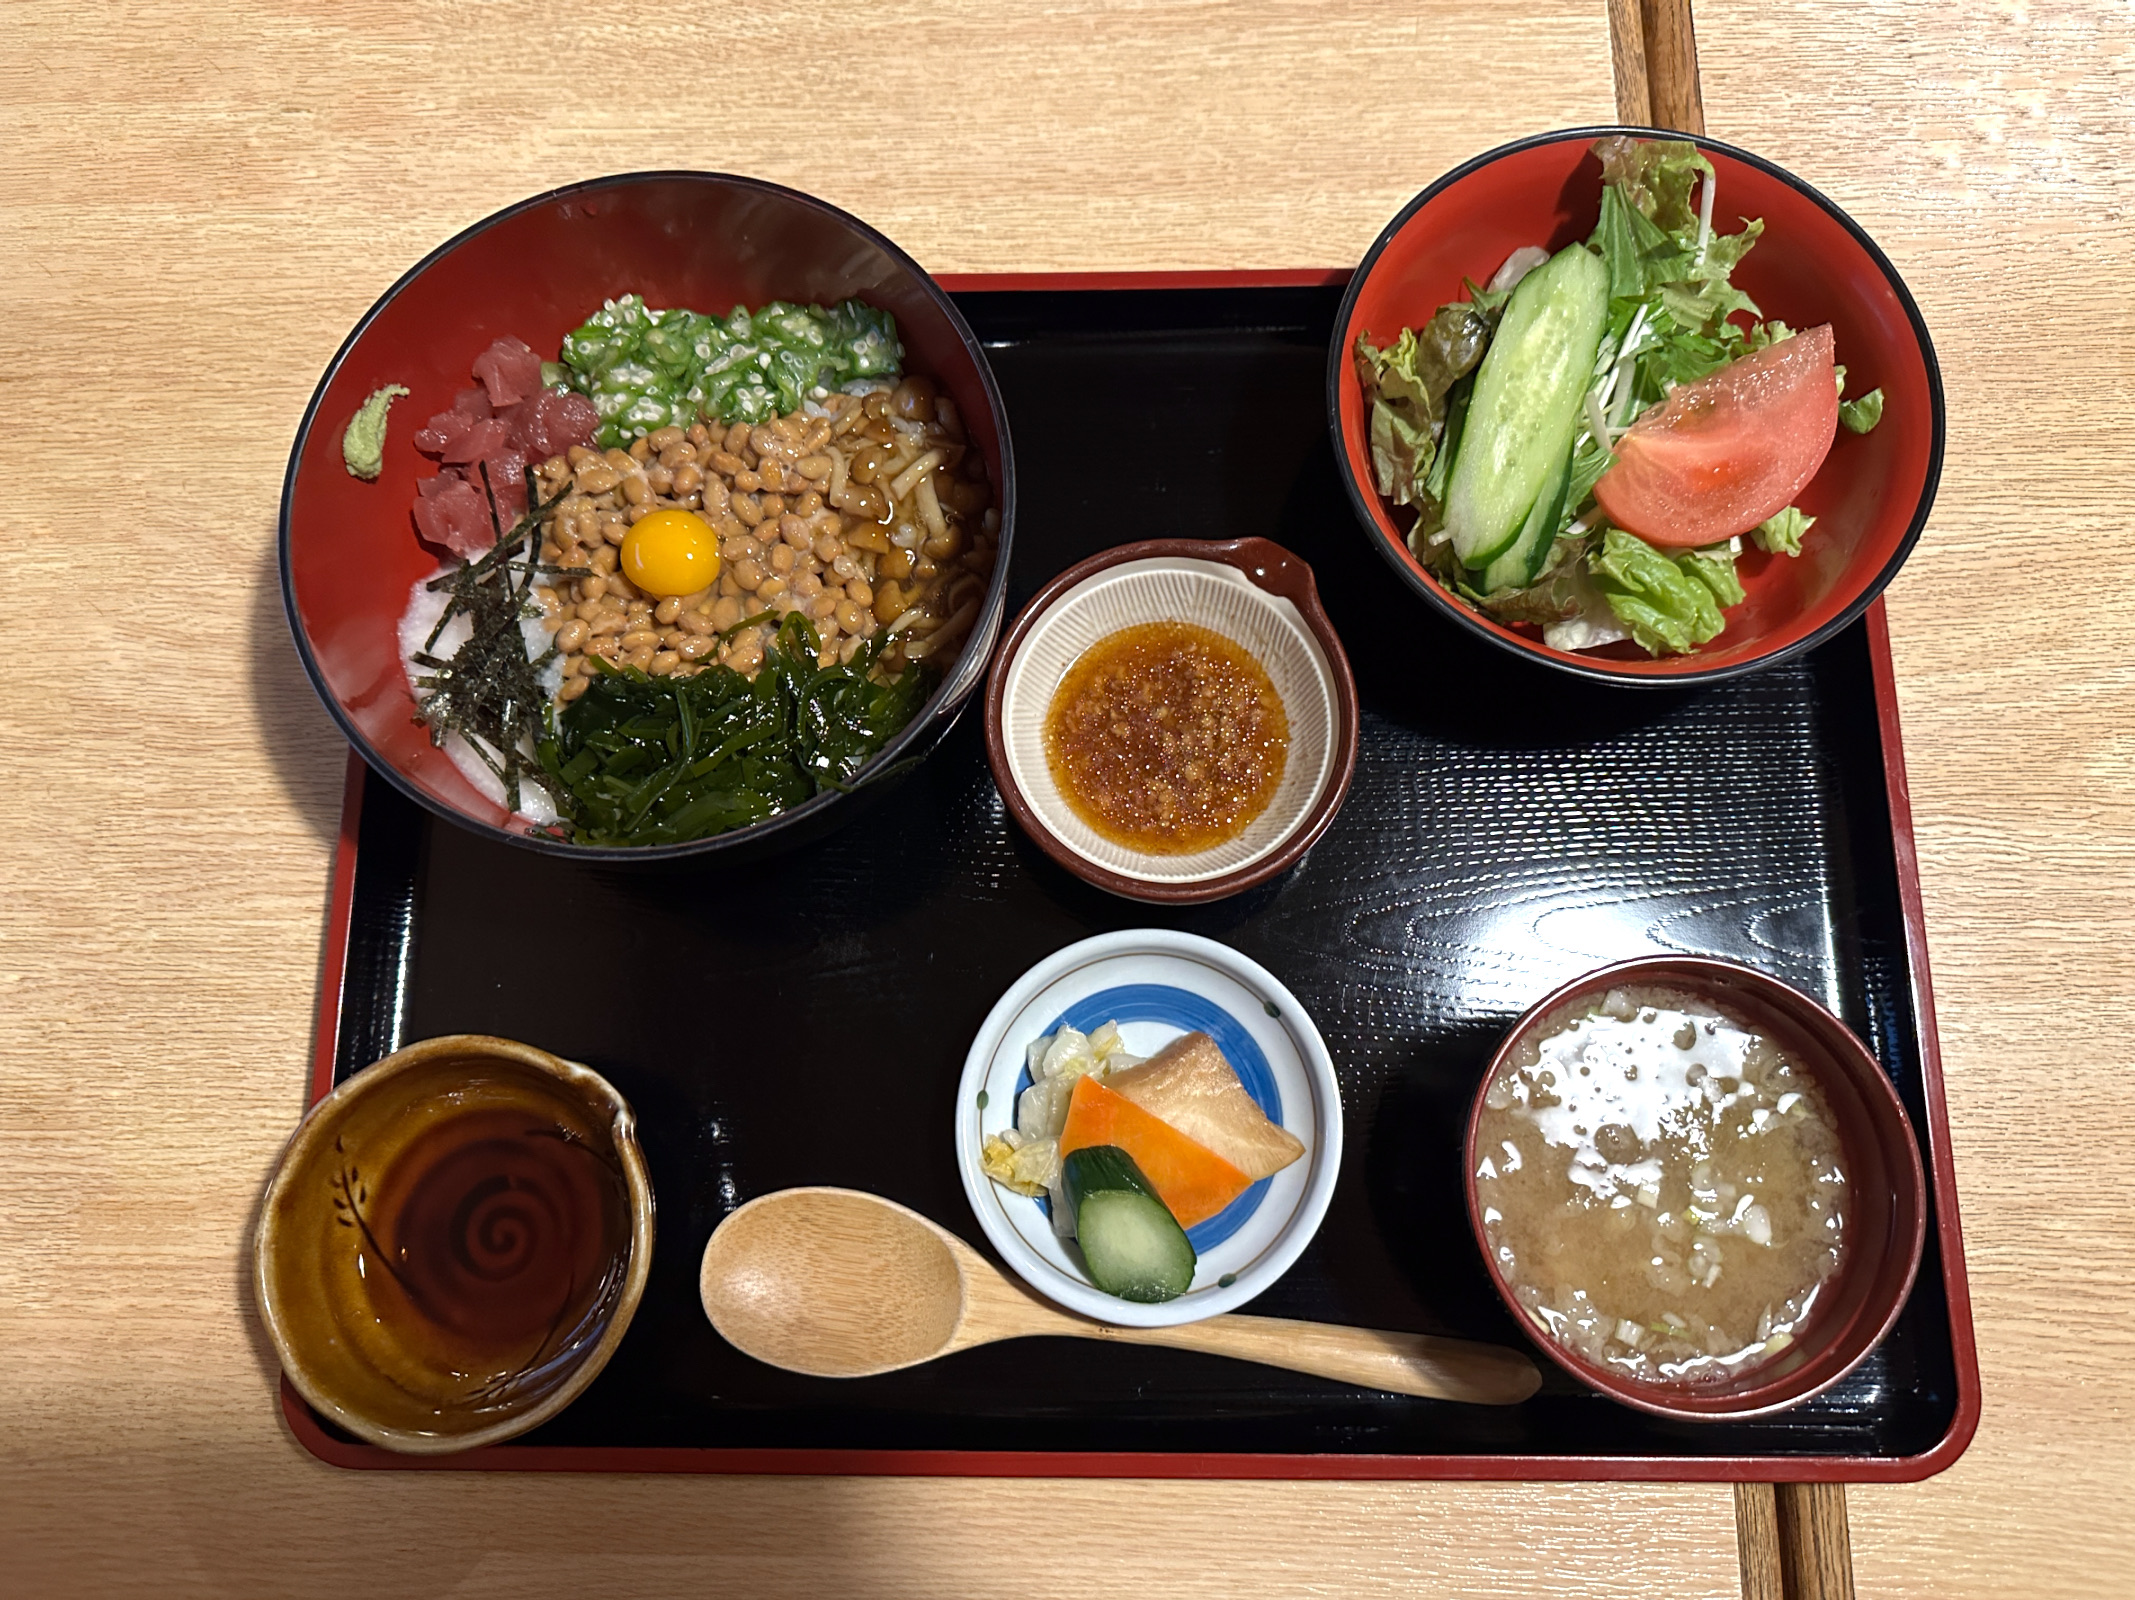 Nebari-don im Restaurant Tenmasa in Mito.